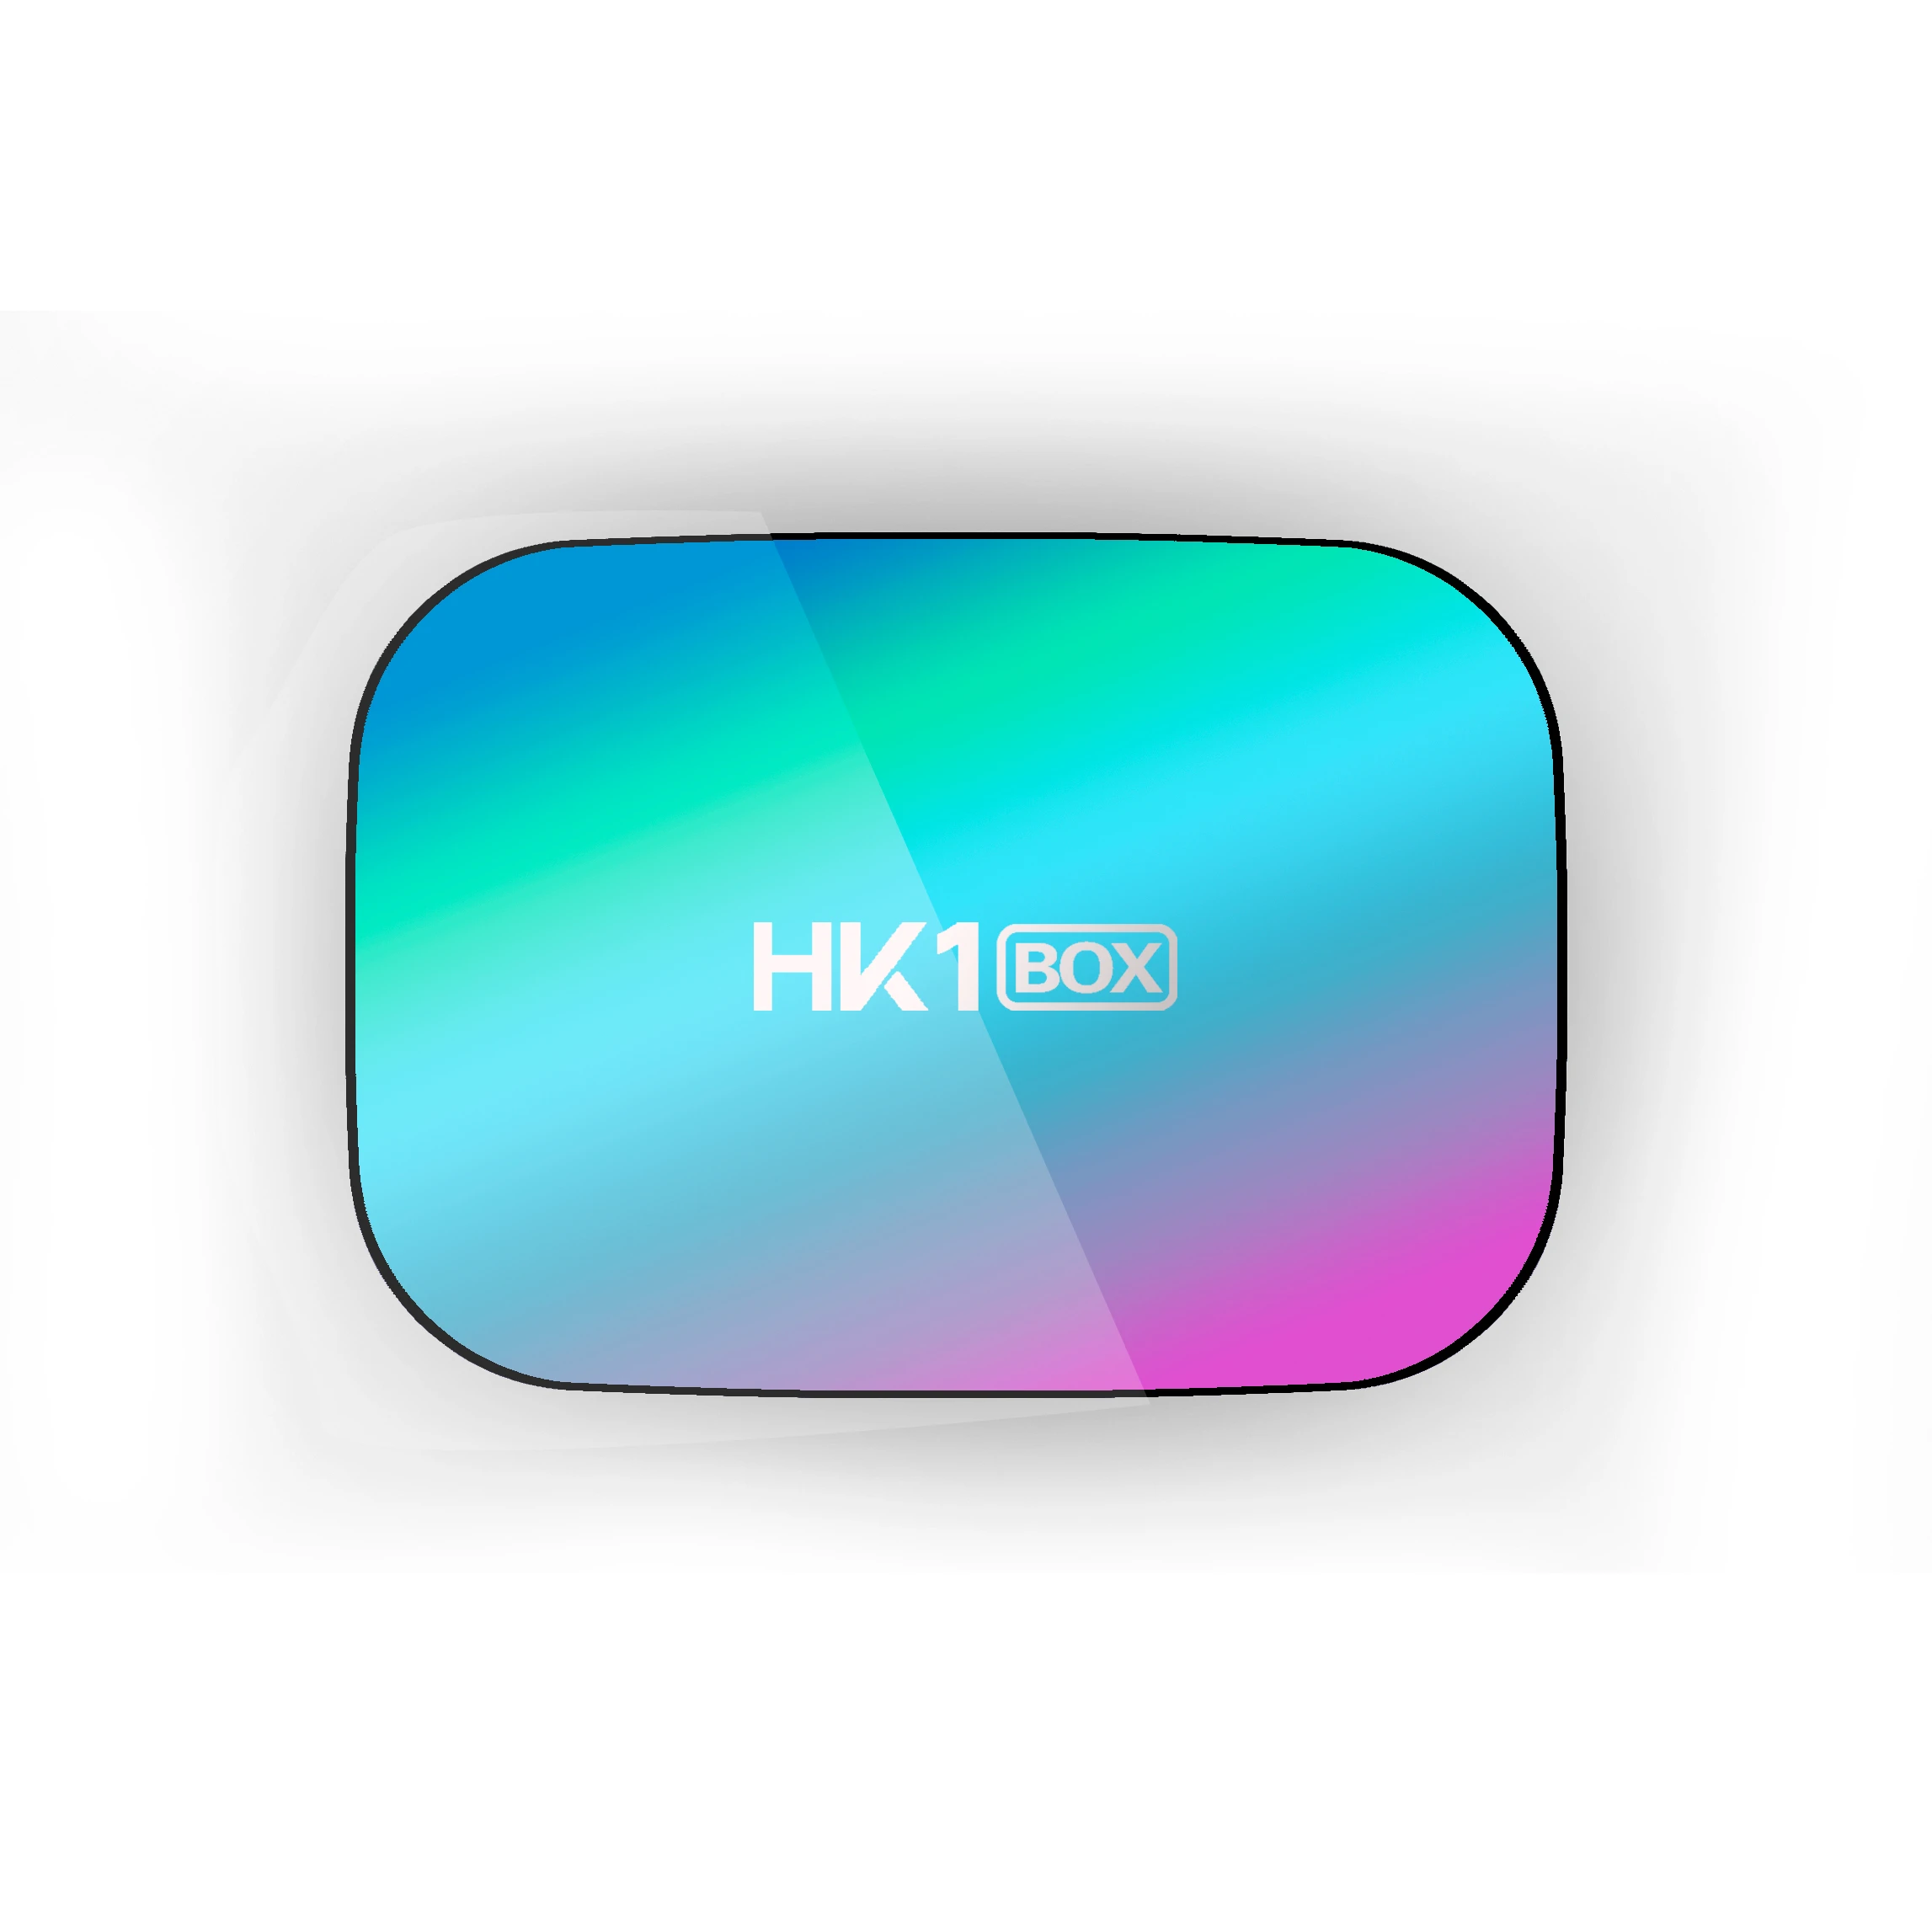 HK1 BOX Android 9.0 Smart Tv Box Amlogic S905X3 Set Top Box 4GB32GB 2.4G/5G AC Wifi 1000M BT4.0 Hk1Box